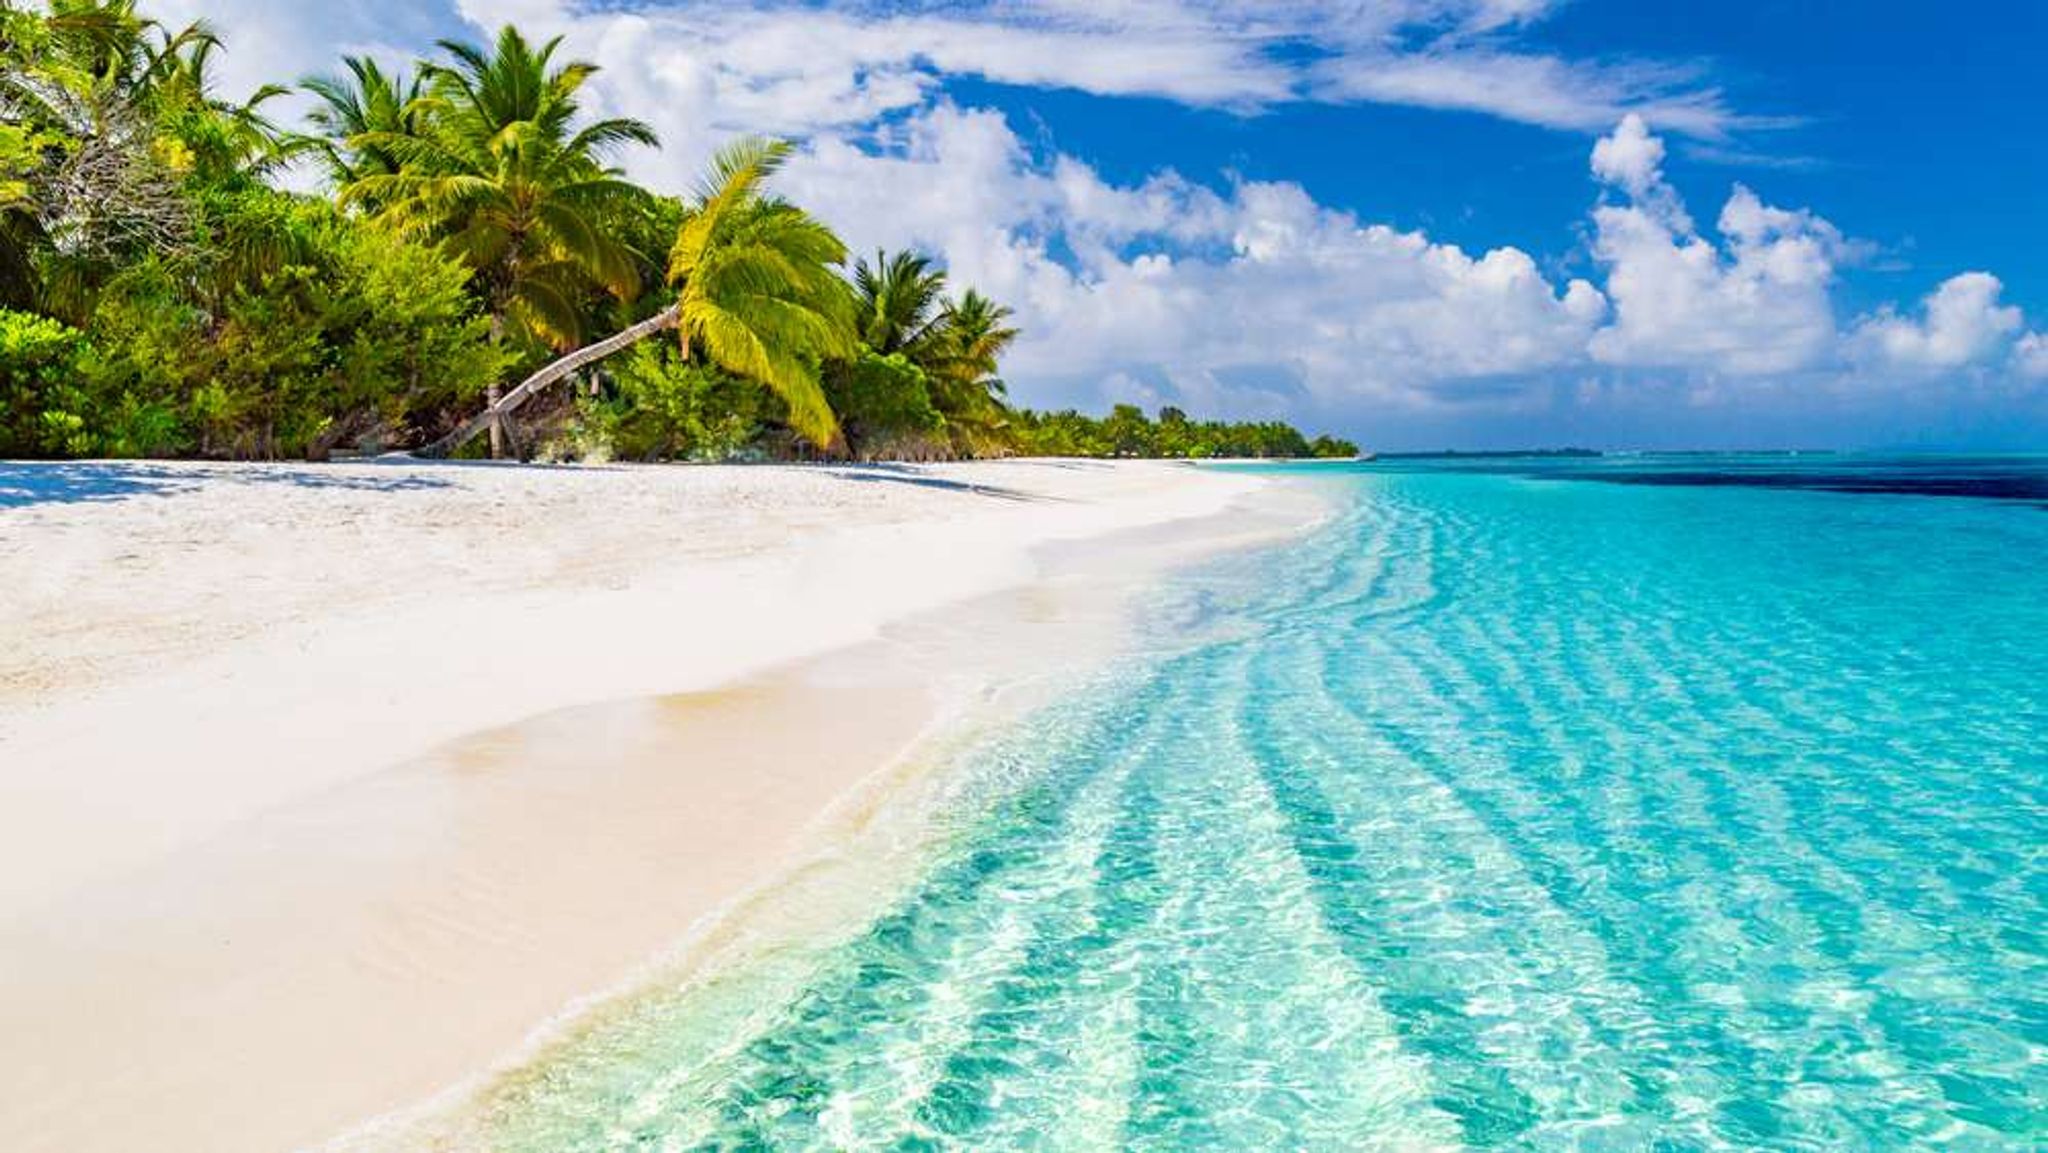 Malediven strand met palmbomen